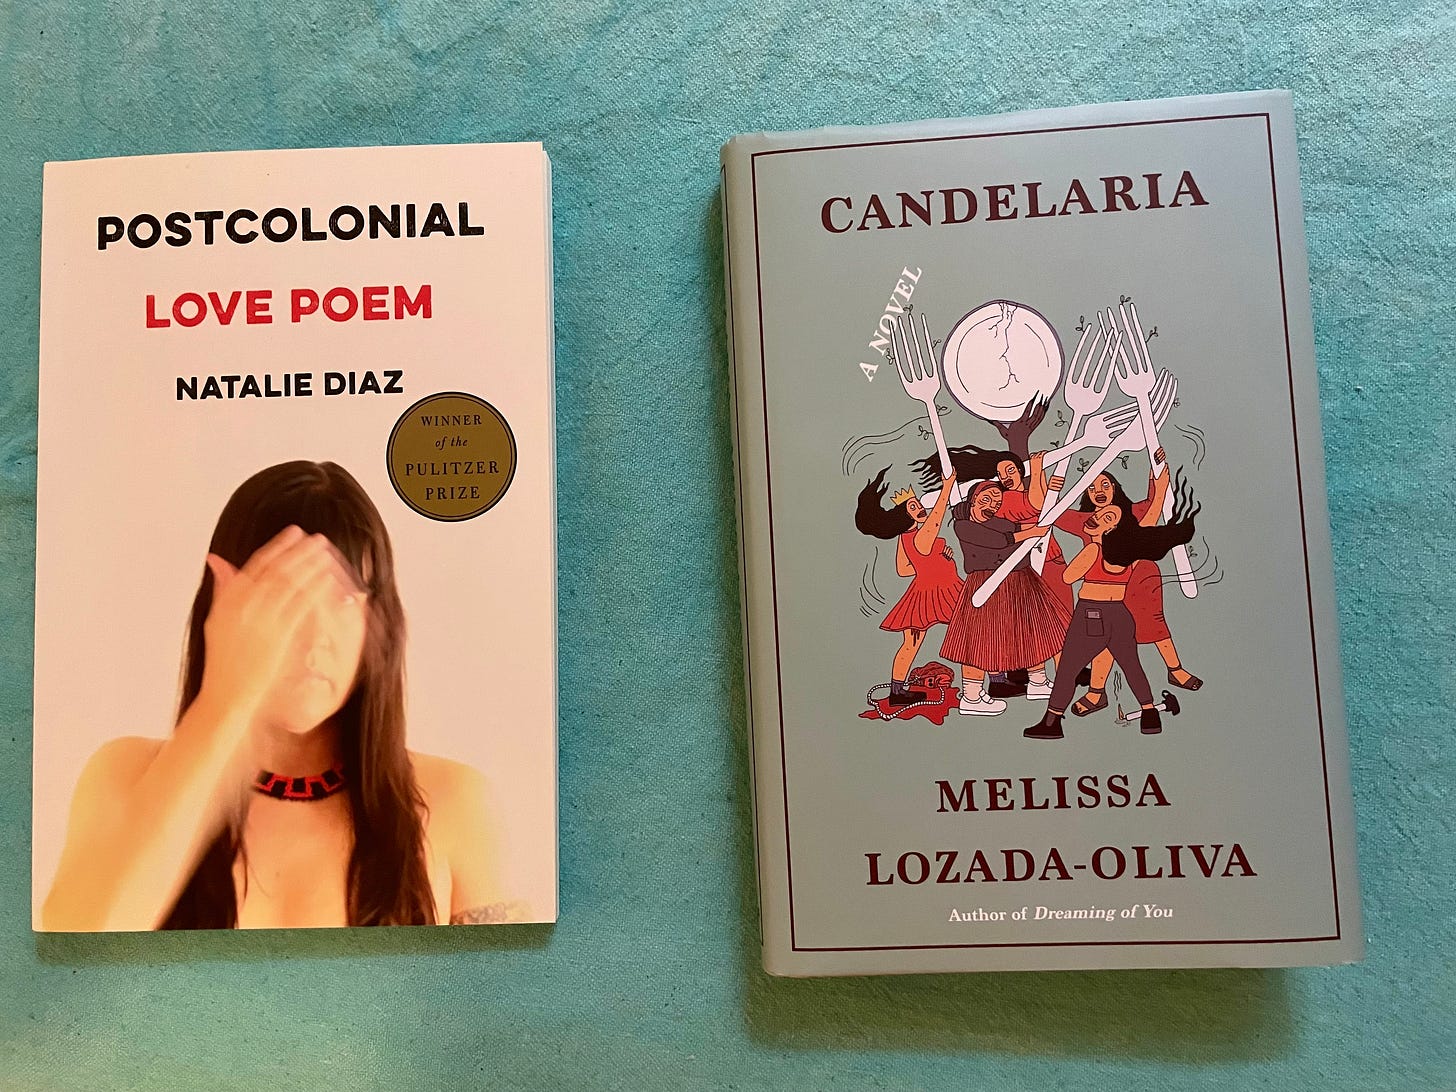 Postcolonial Love Poem by Natalie Diaz and Candelaria by Melissa Lozada-Oliva